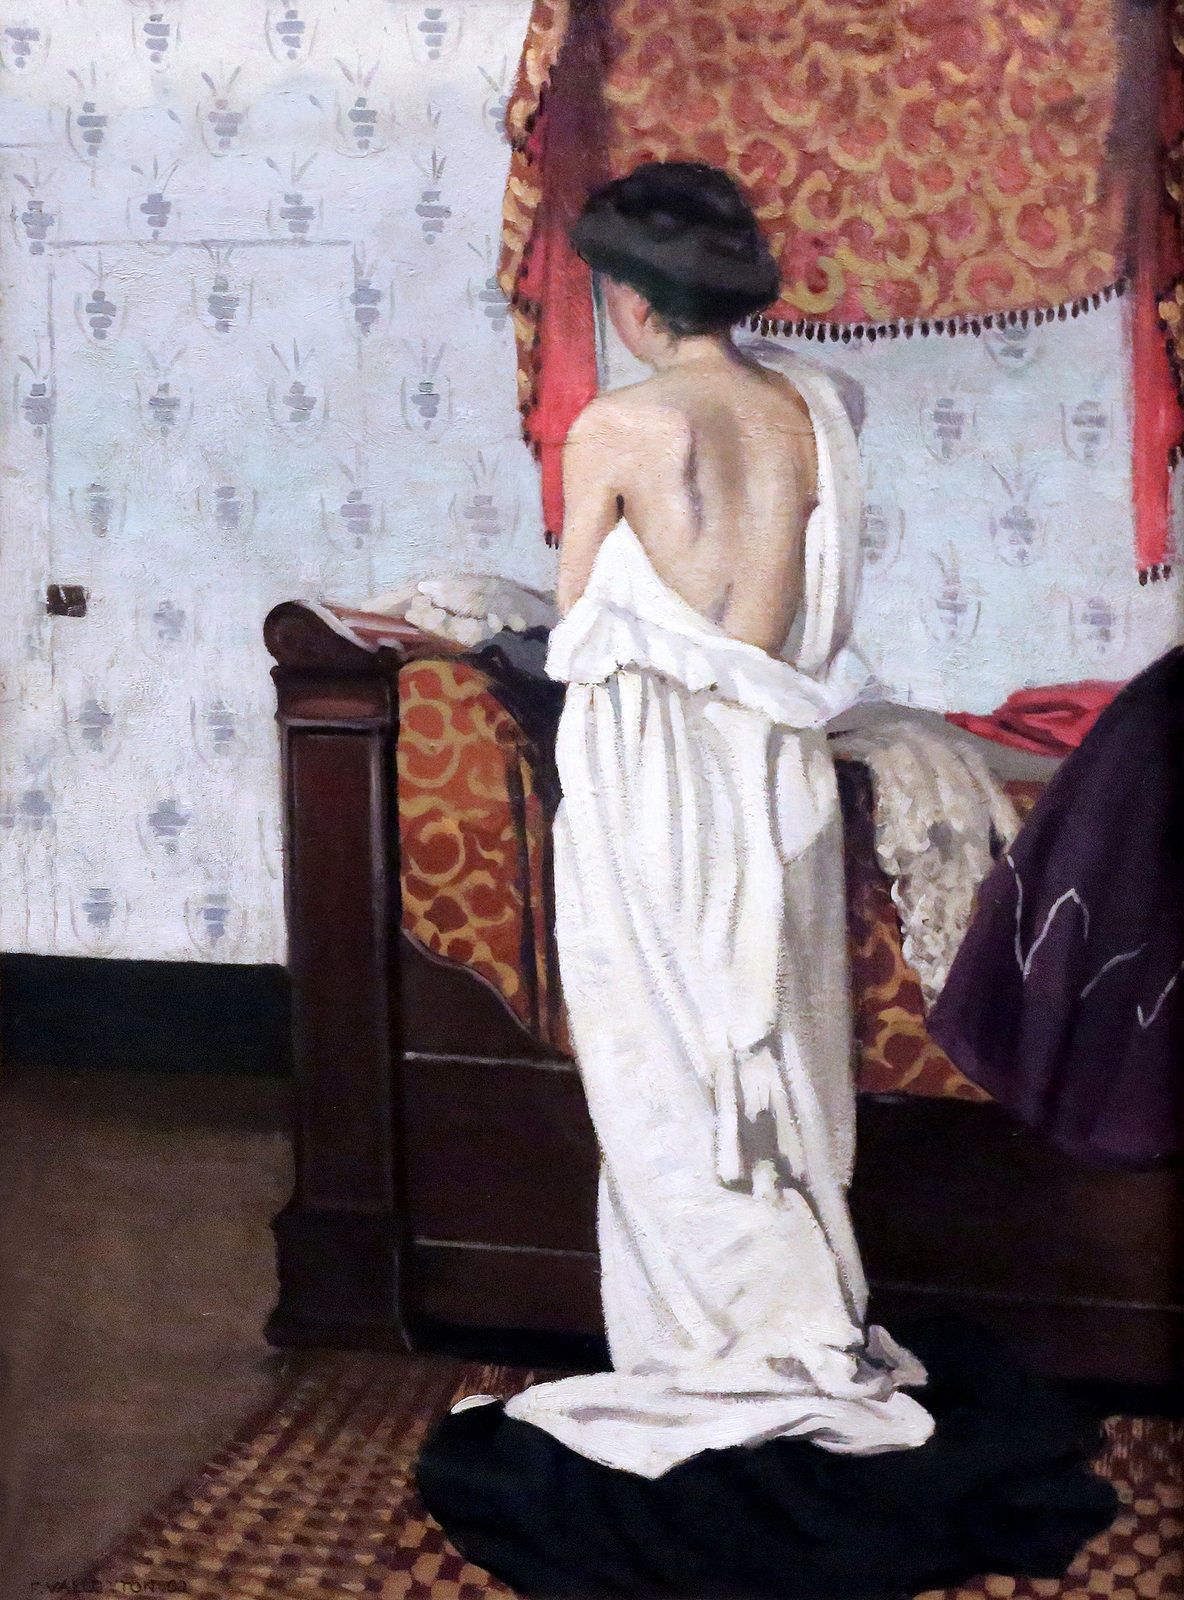 Interieur, Naakt van achteren gezien by Félix Vallotton - 1902 - 76.5 x 57 cm Kunsthalle Bremen